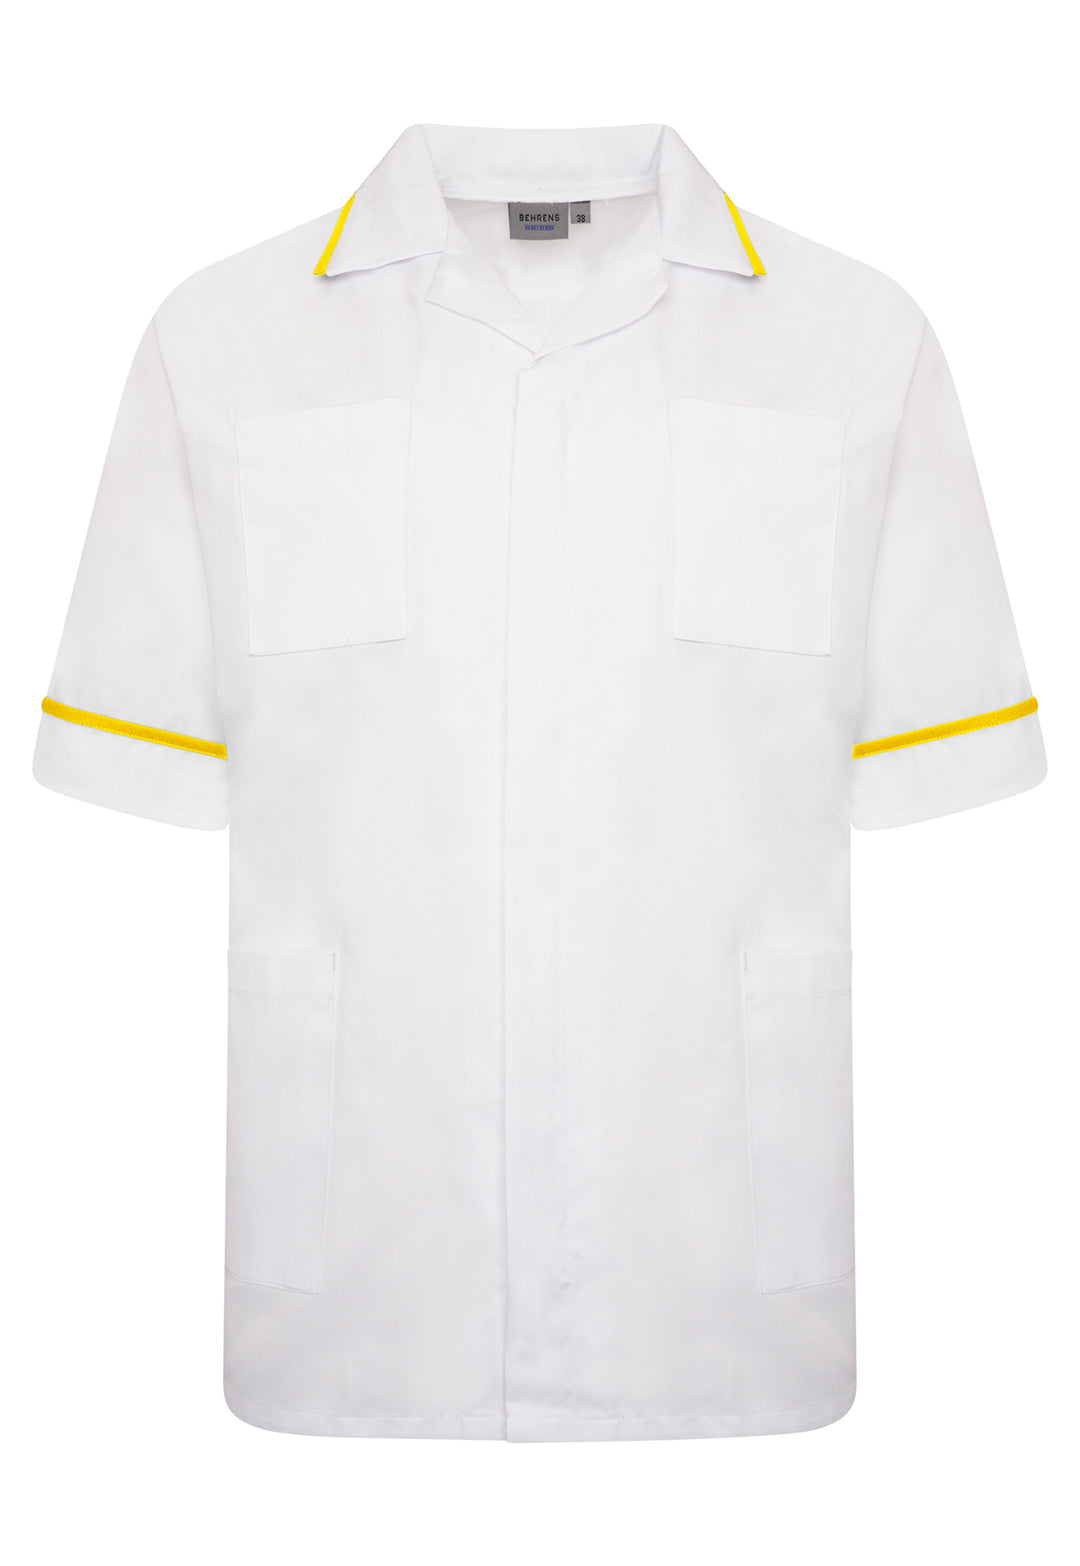 Men's Healthcare Tunic NCMT - The Work Uniform Company